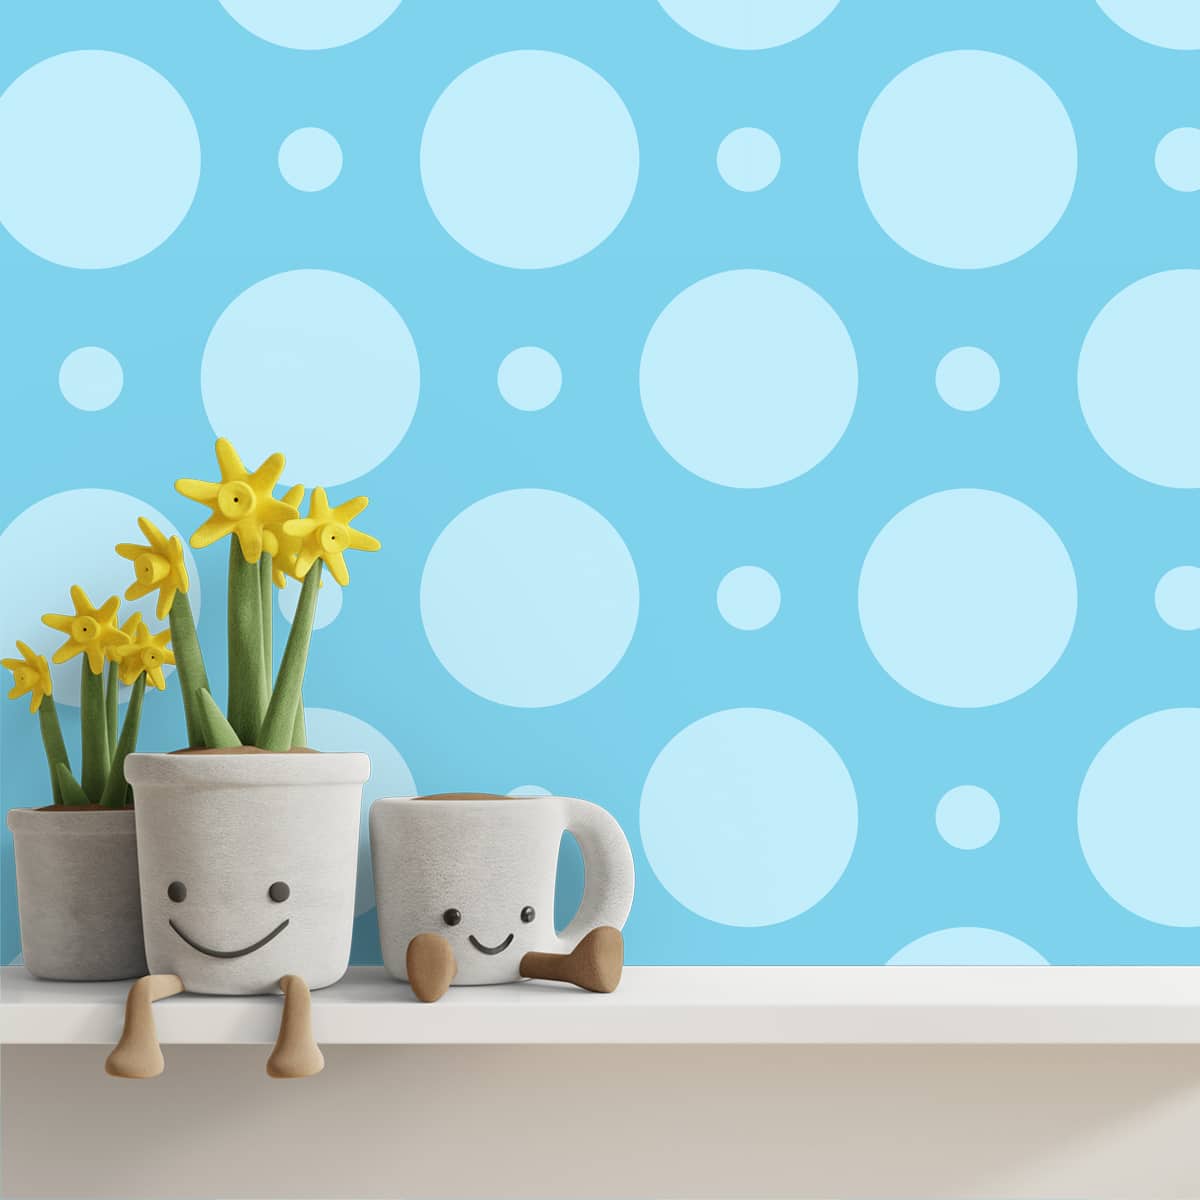 Blue Polka Dots Wallpaper for Kids Room, Customised Design